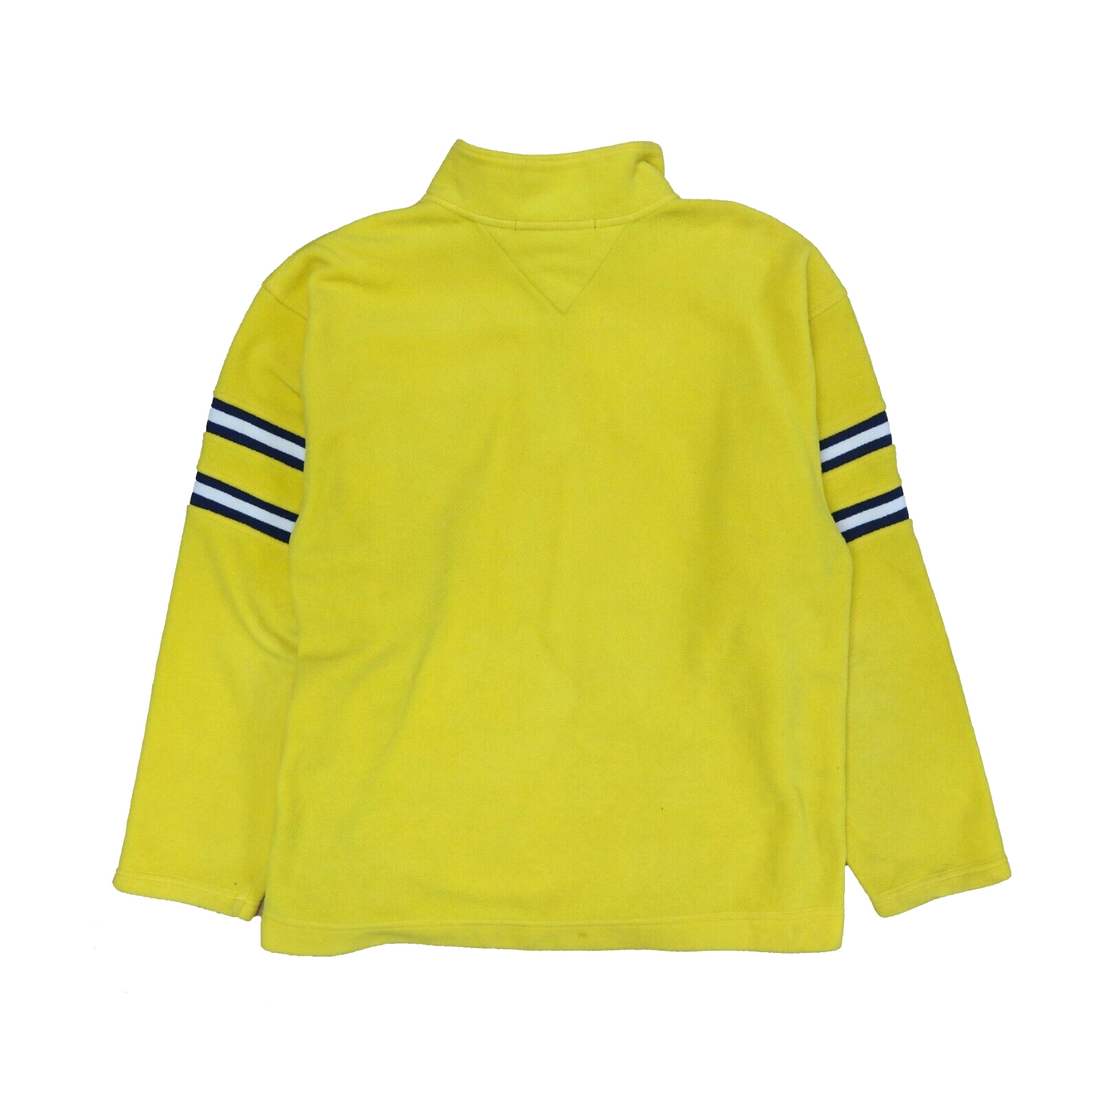 Vintage Tommy Hilfiger Fleece Jacket Size XL Yellow 1/4 Zip Pullover 90s